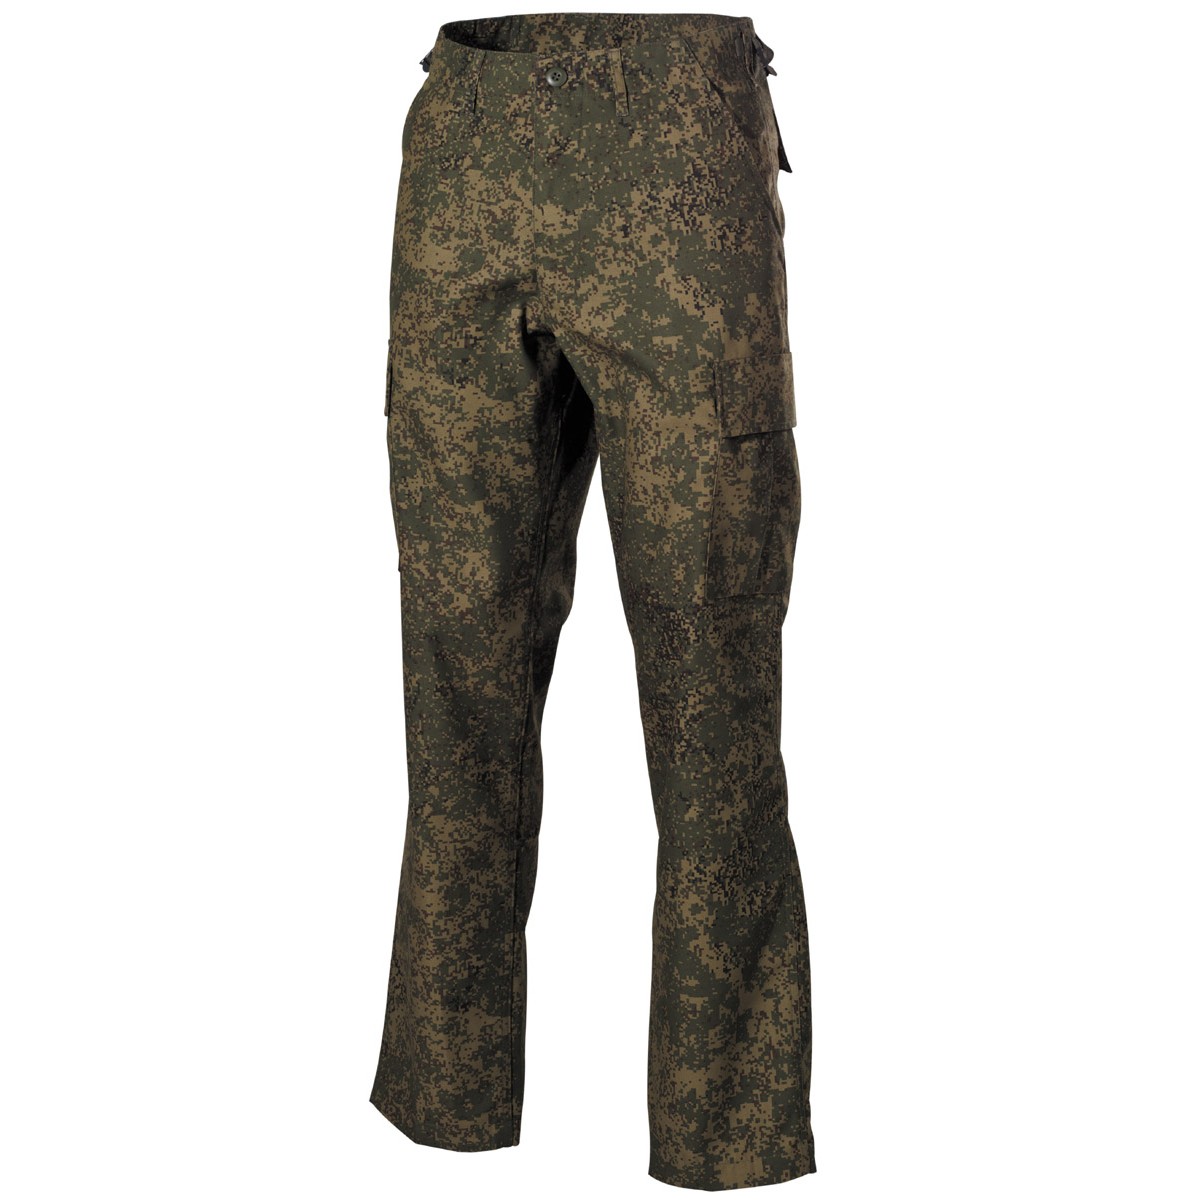 Russian Army Digital Camo Pattern BDU Field Pants